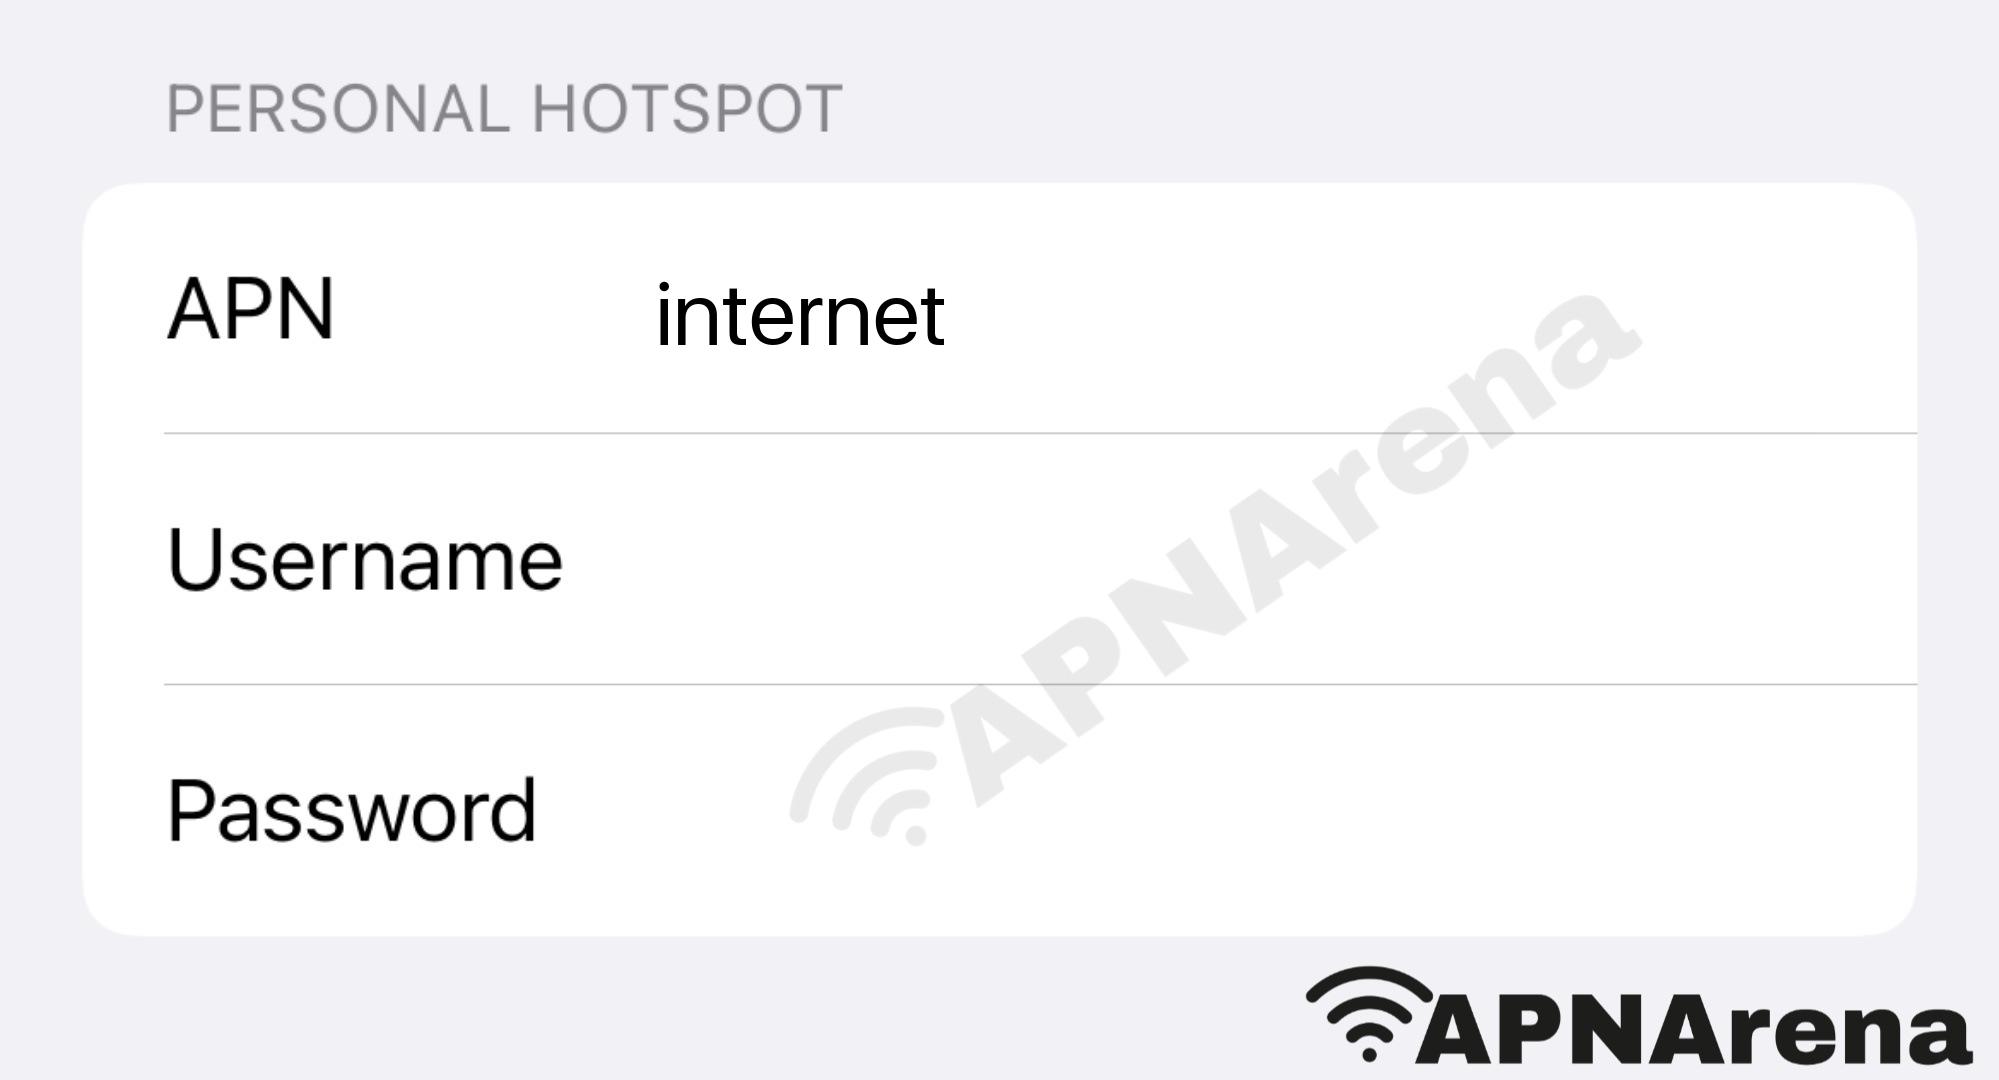 Telkomcel Personal Hotspot Settings for iPhone